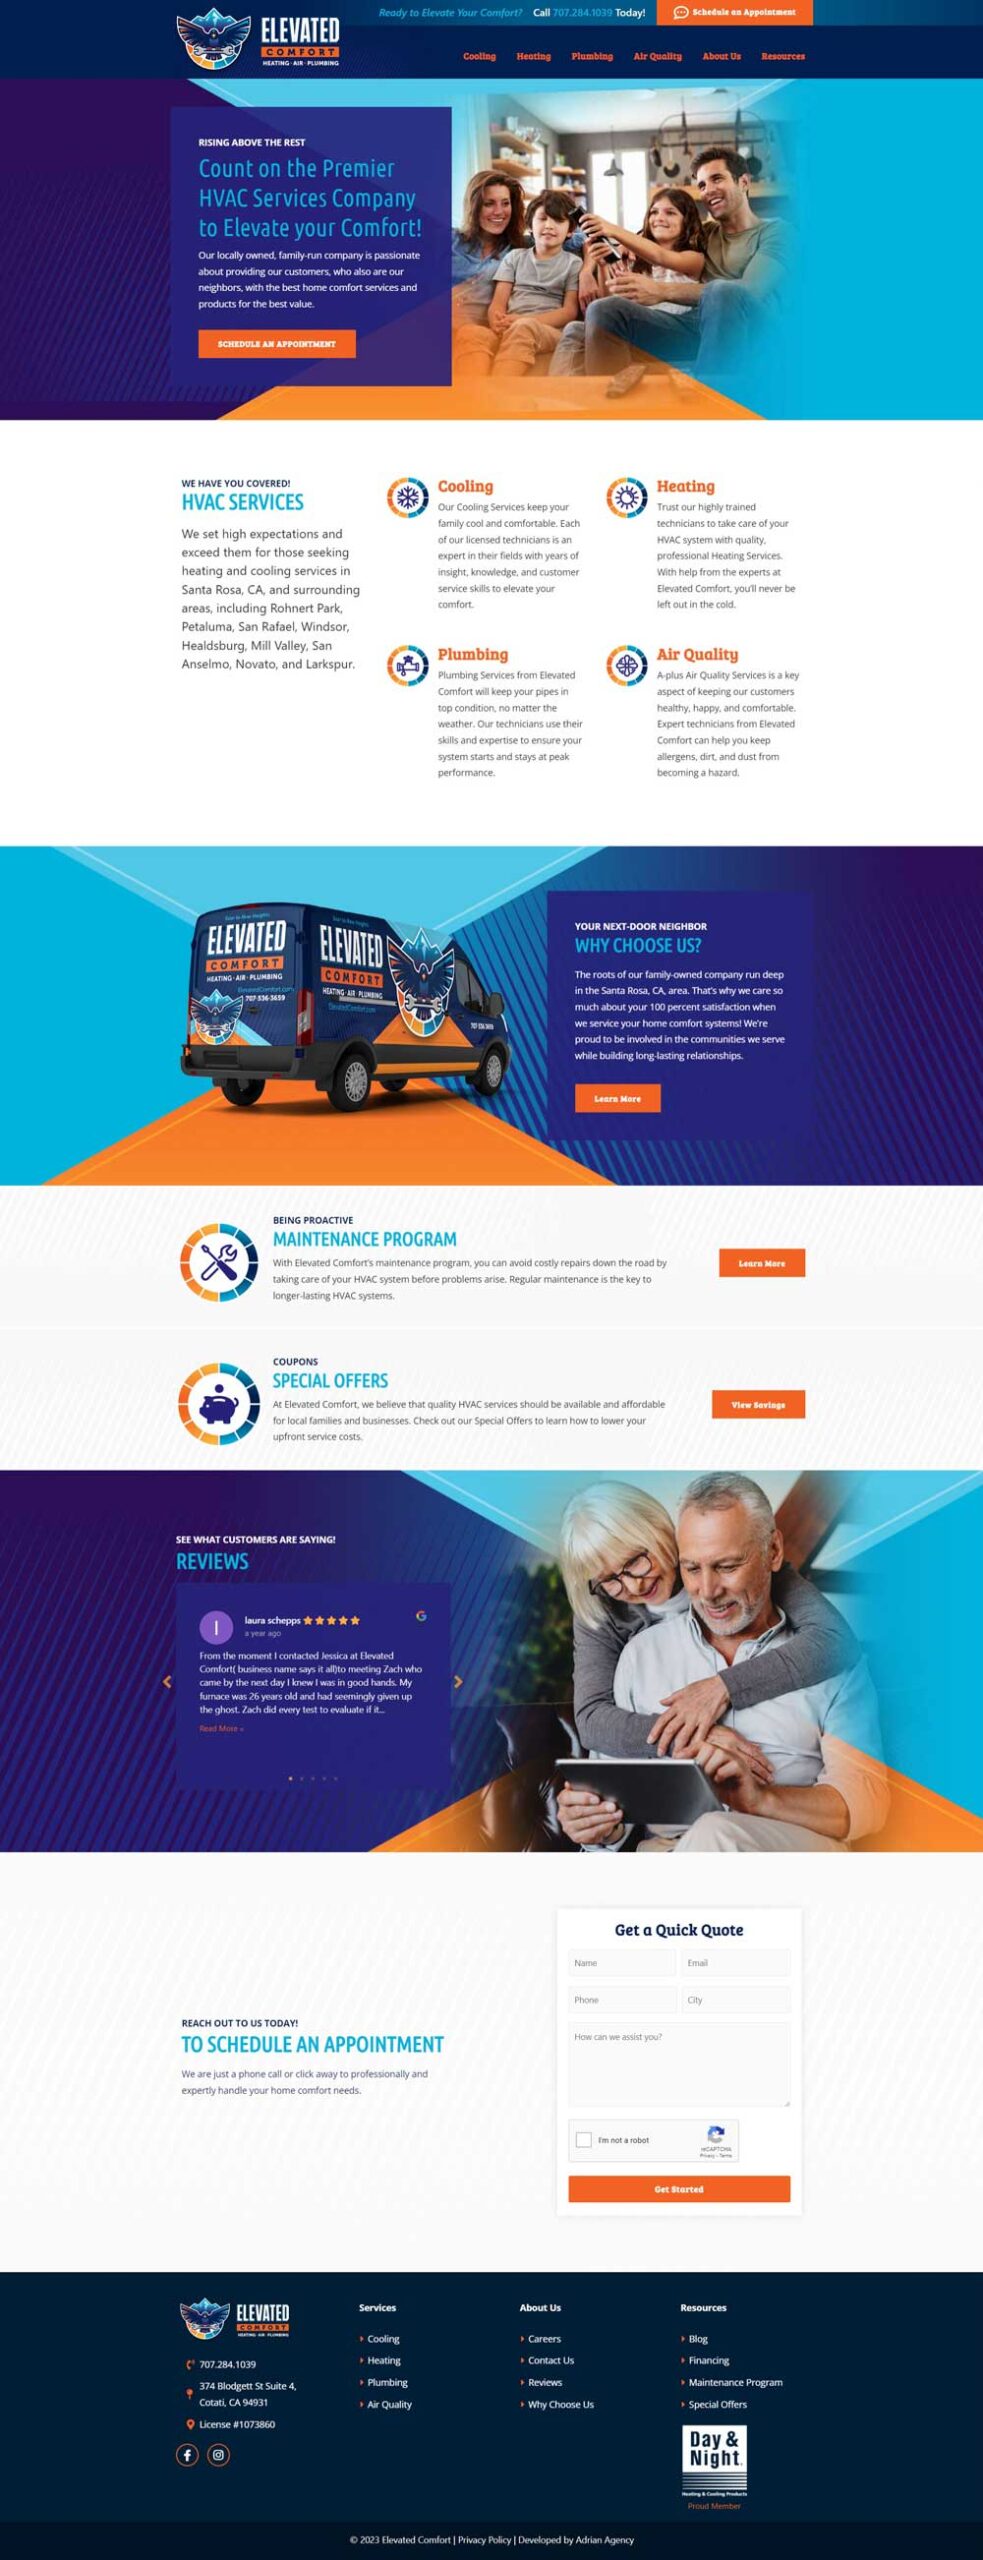 HVAC marketing services - Adrian Agency - RESPONSIVE Website Design